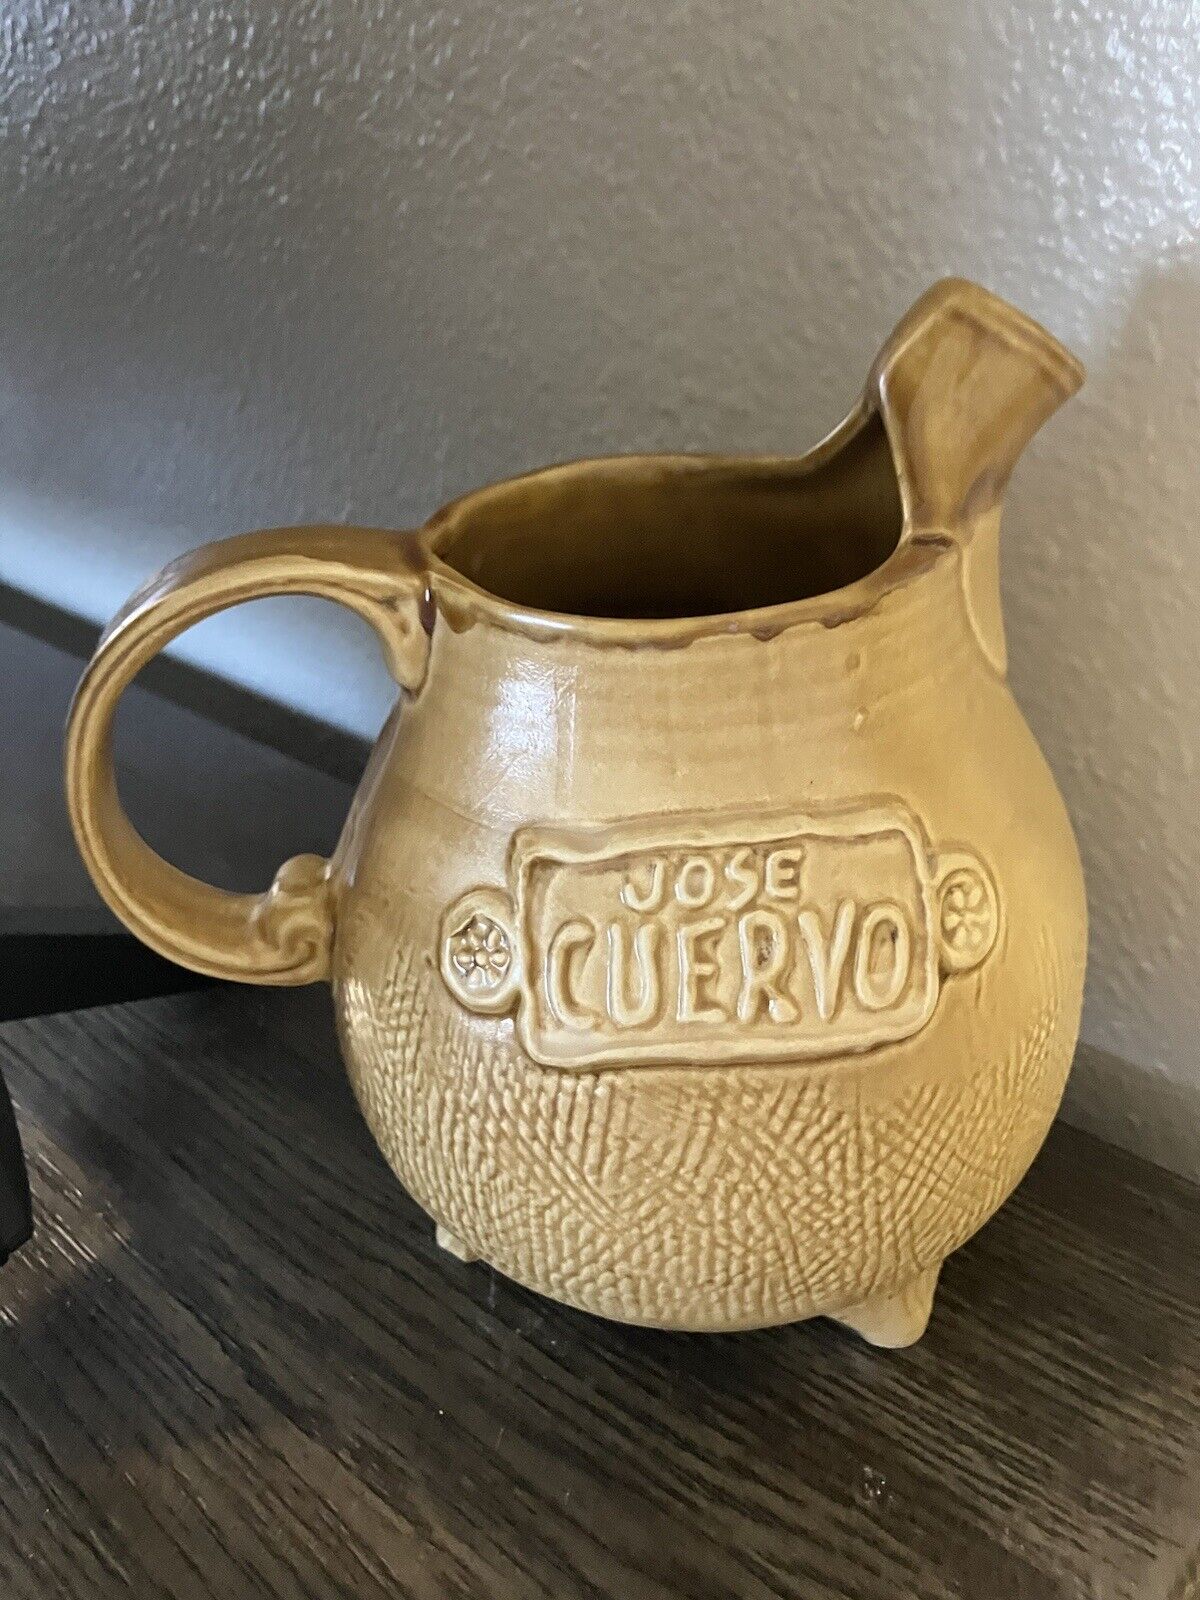 1975 Jose Cuervo Tequila Ceramic Pitcher- Hartford, Connecticut